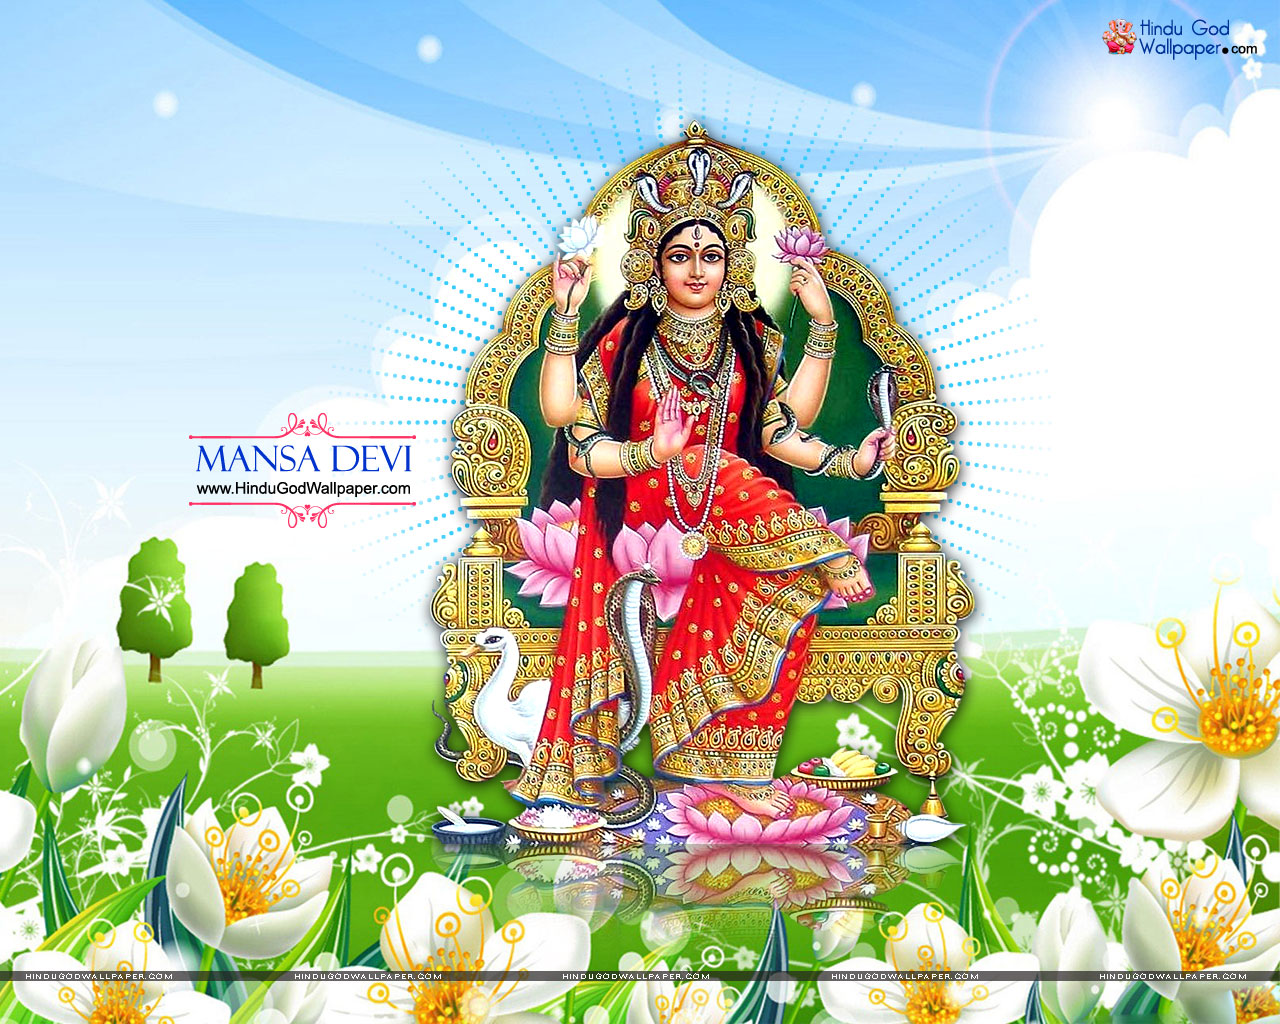 Mata Mansa Devi Wallpaper Free Download